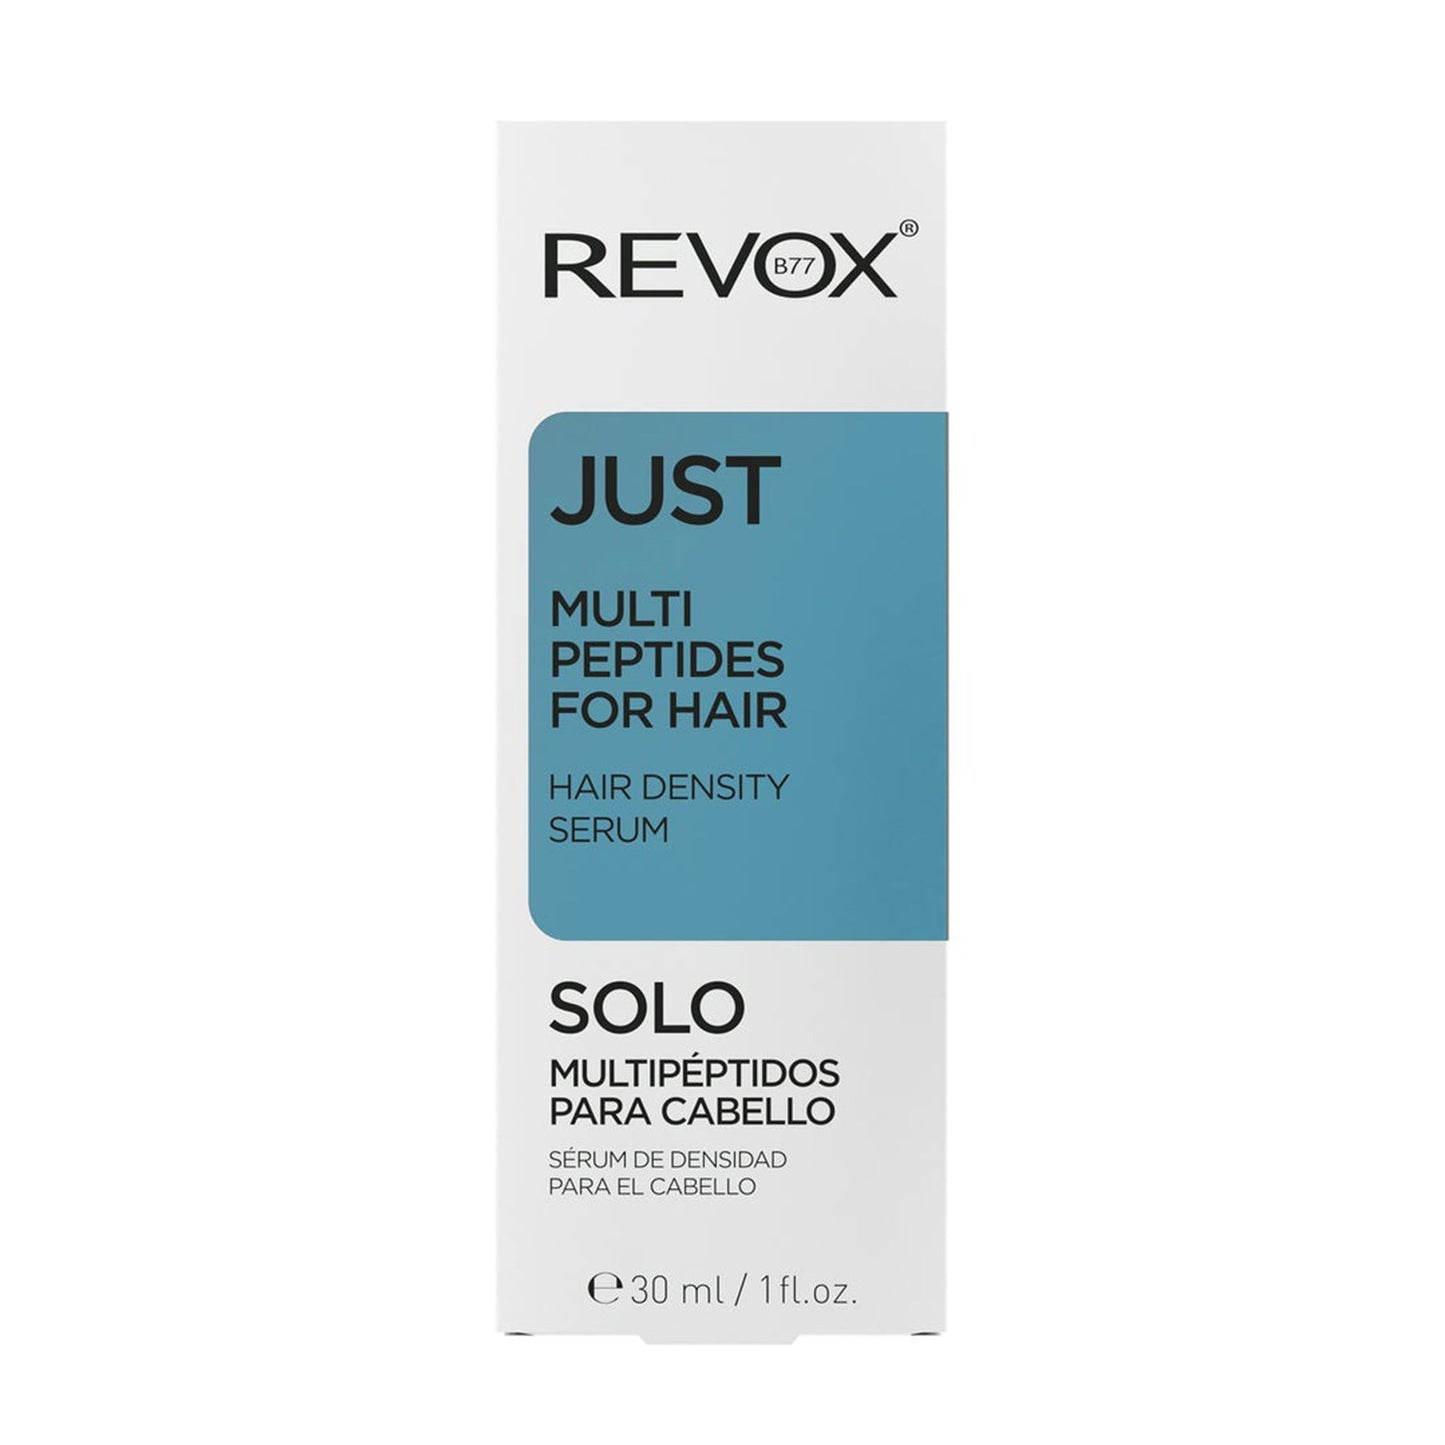 Revox B77 JUST Multi Peptides for Hair